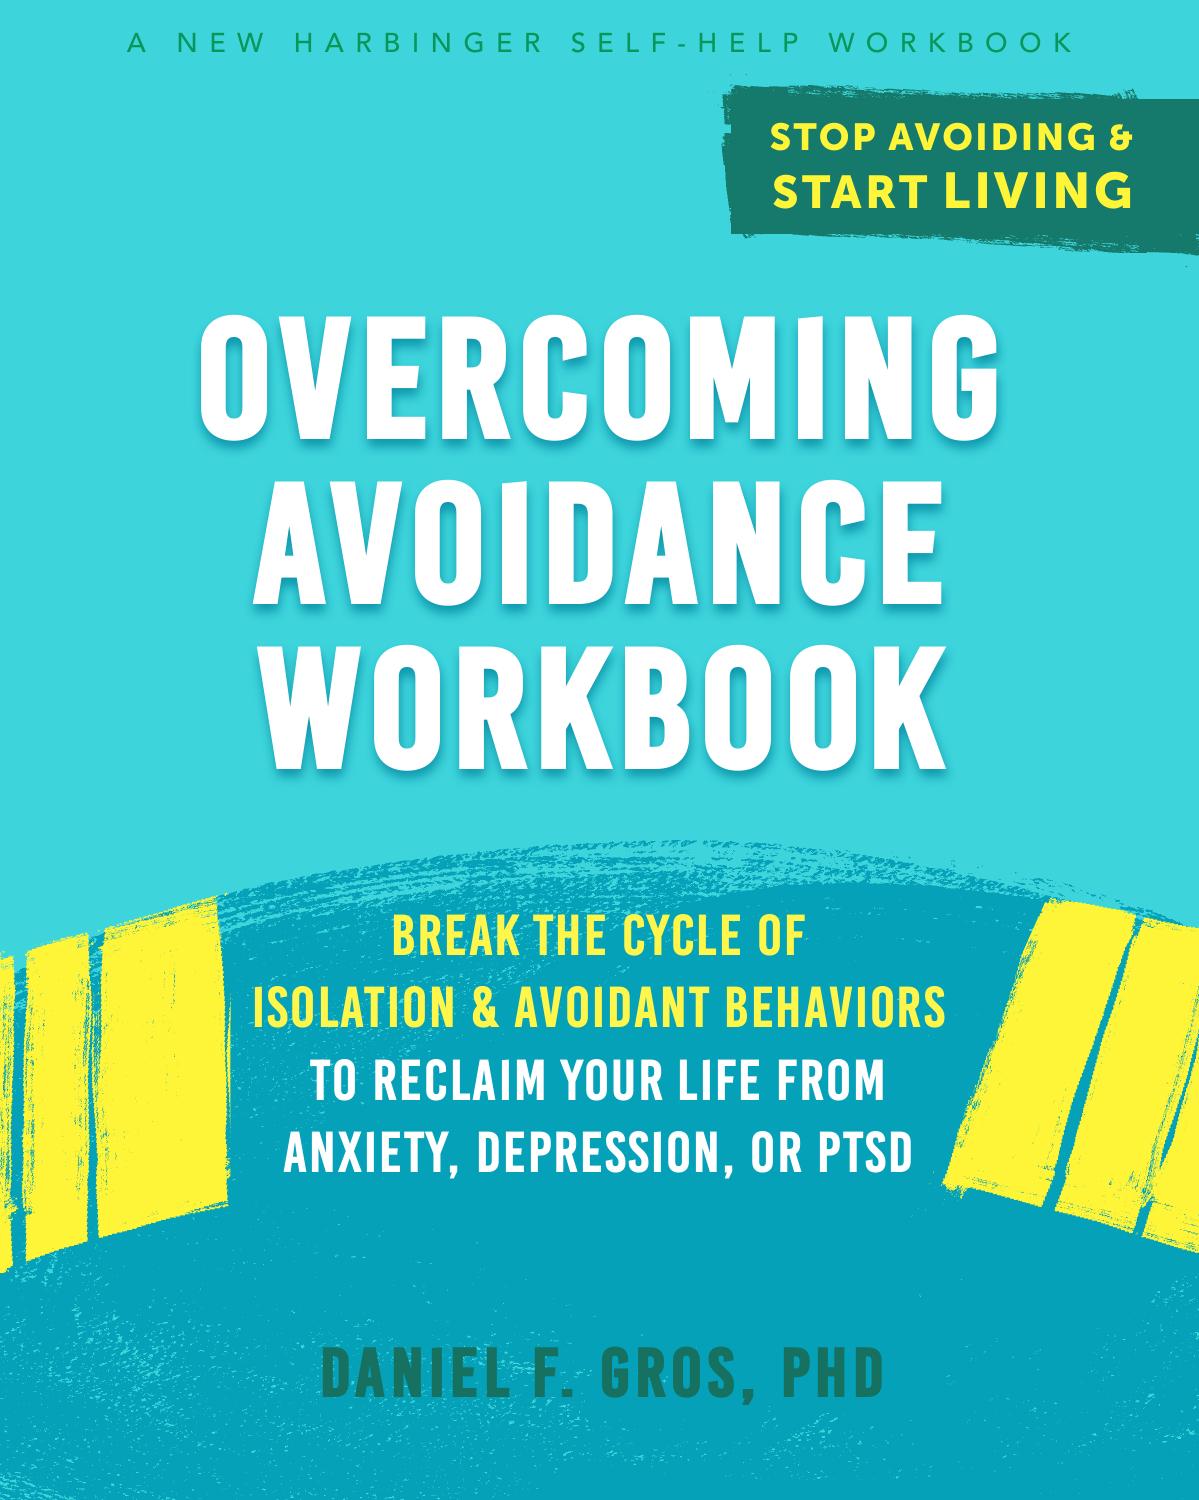 Overcoming Avoidance Workbook by Daniel F. Gros